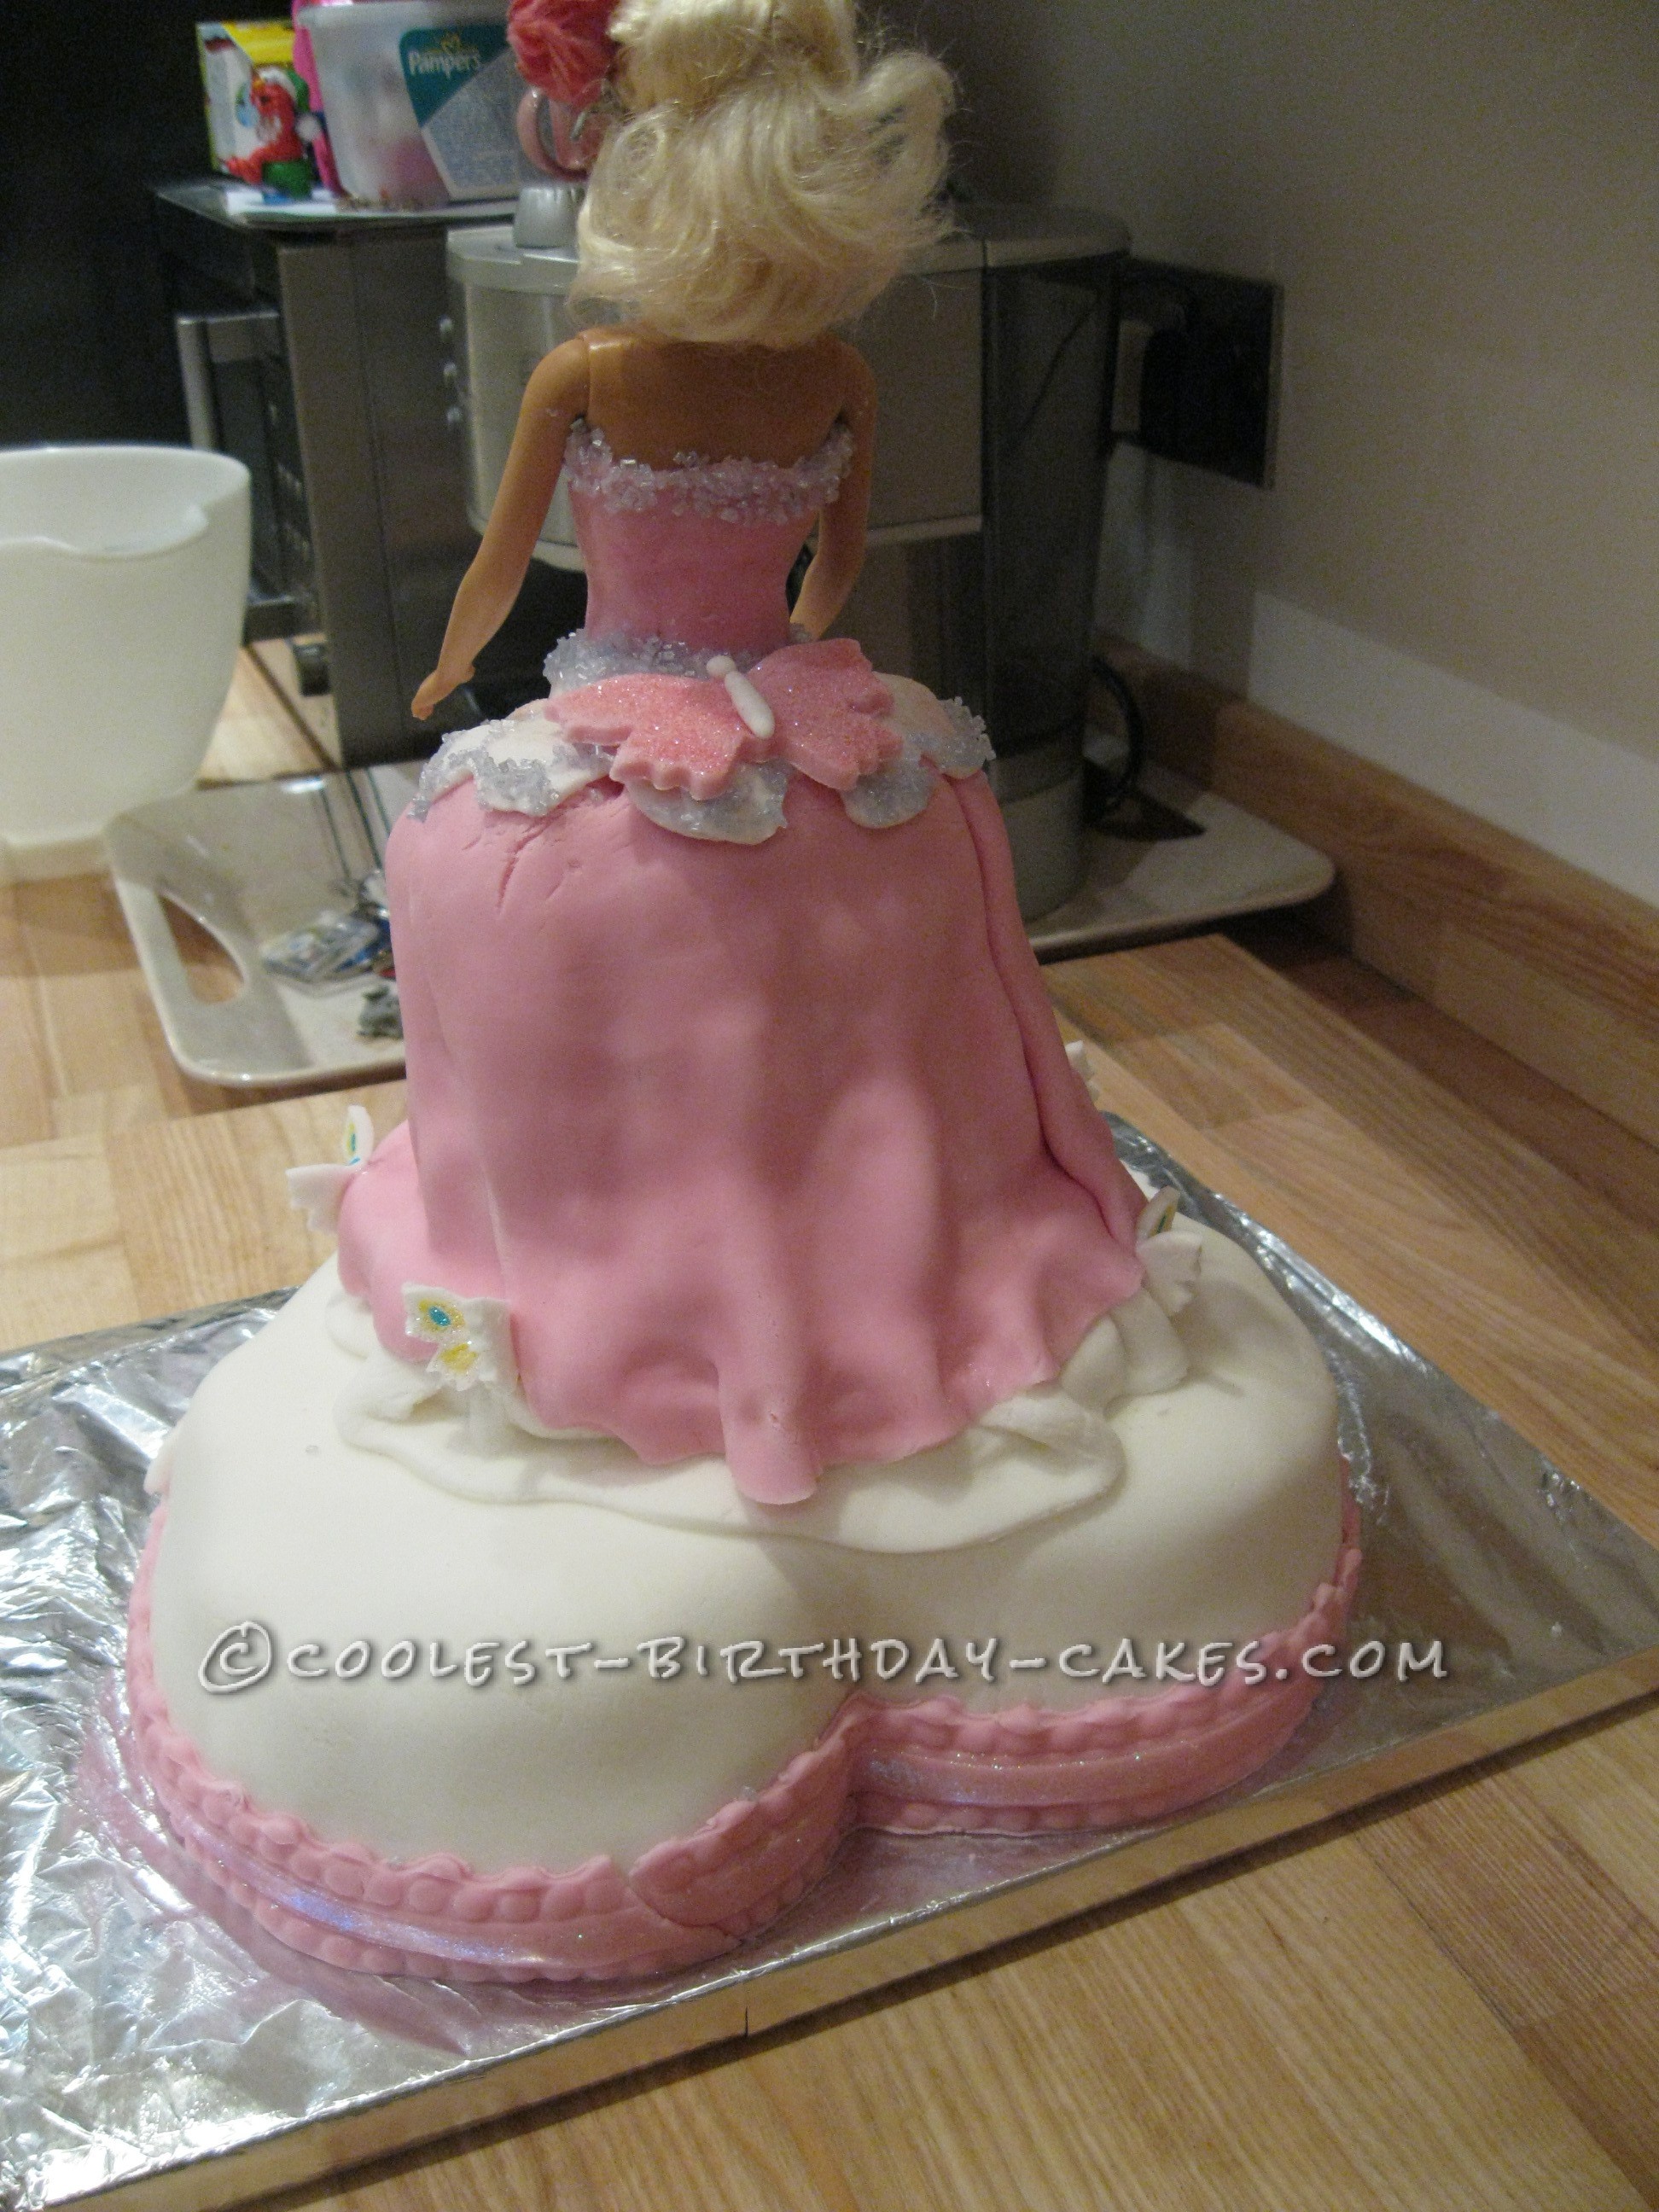 Dazzling Princess Cake Fit for a Princess